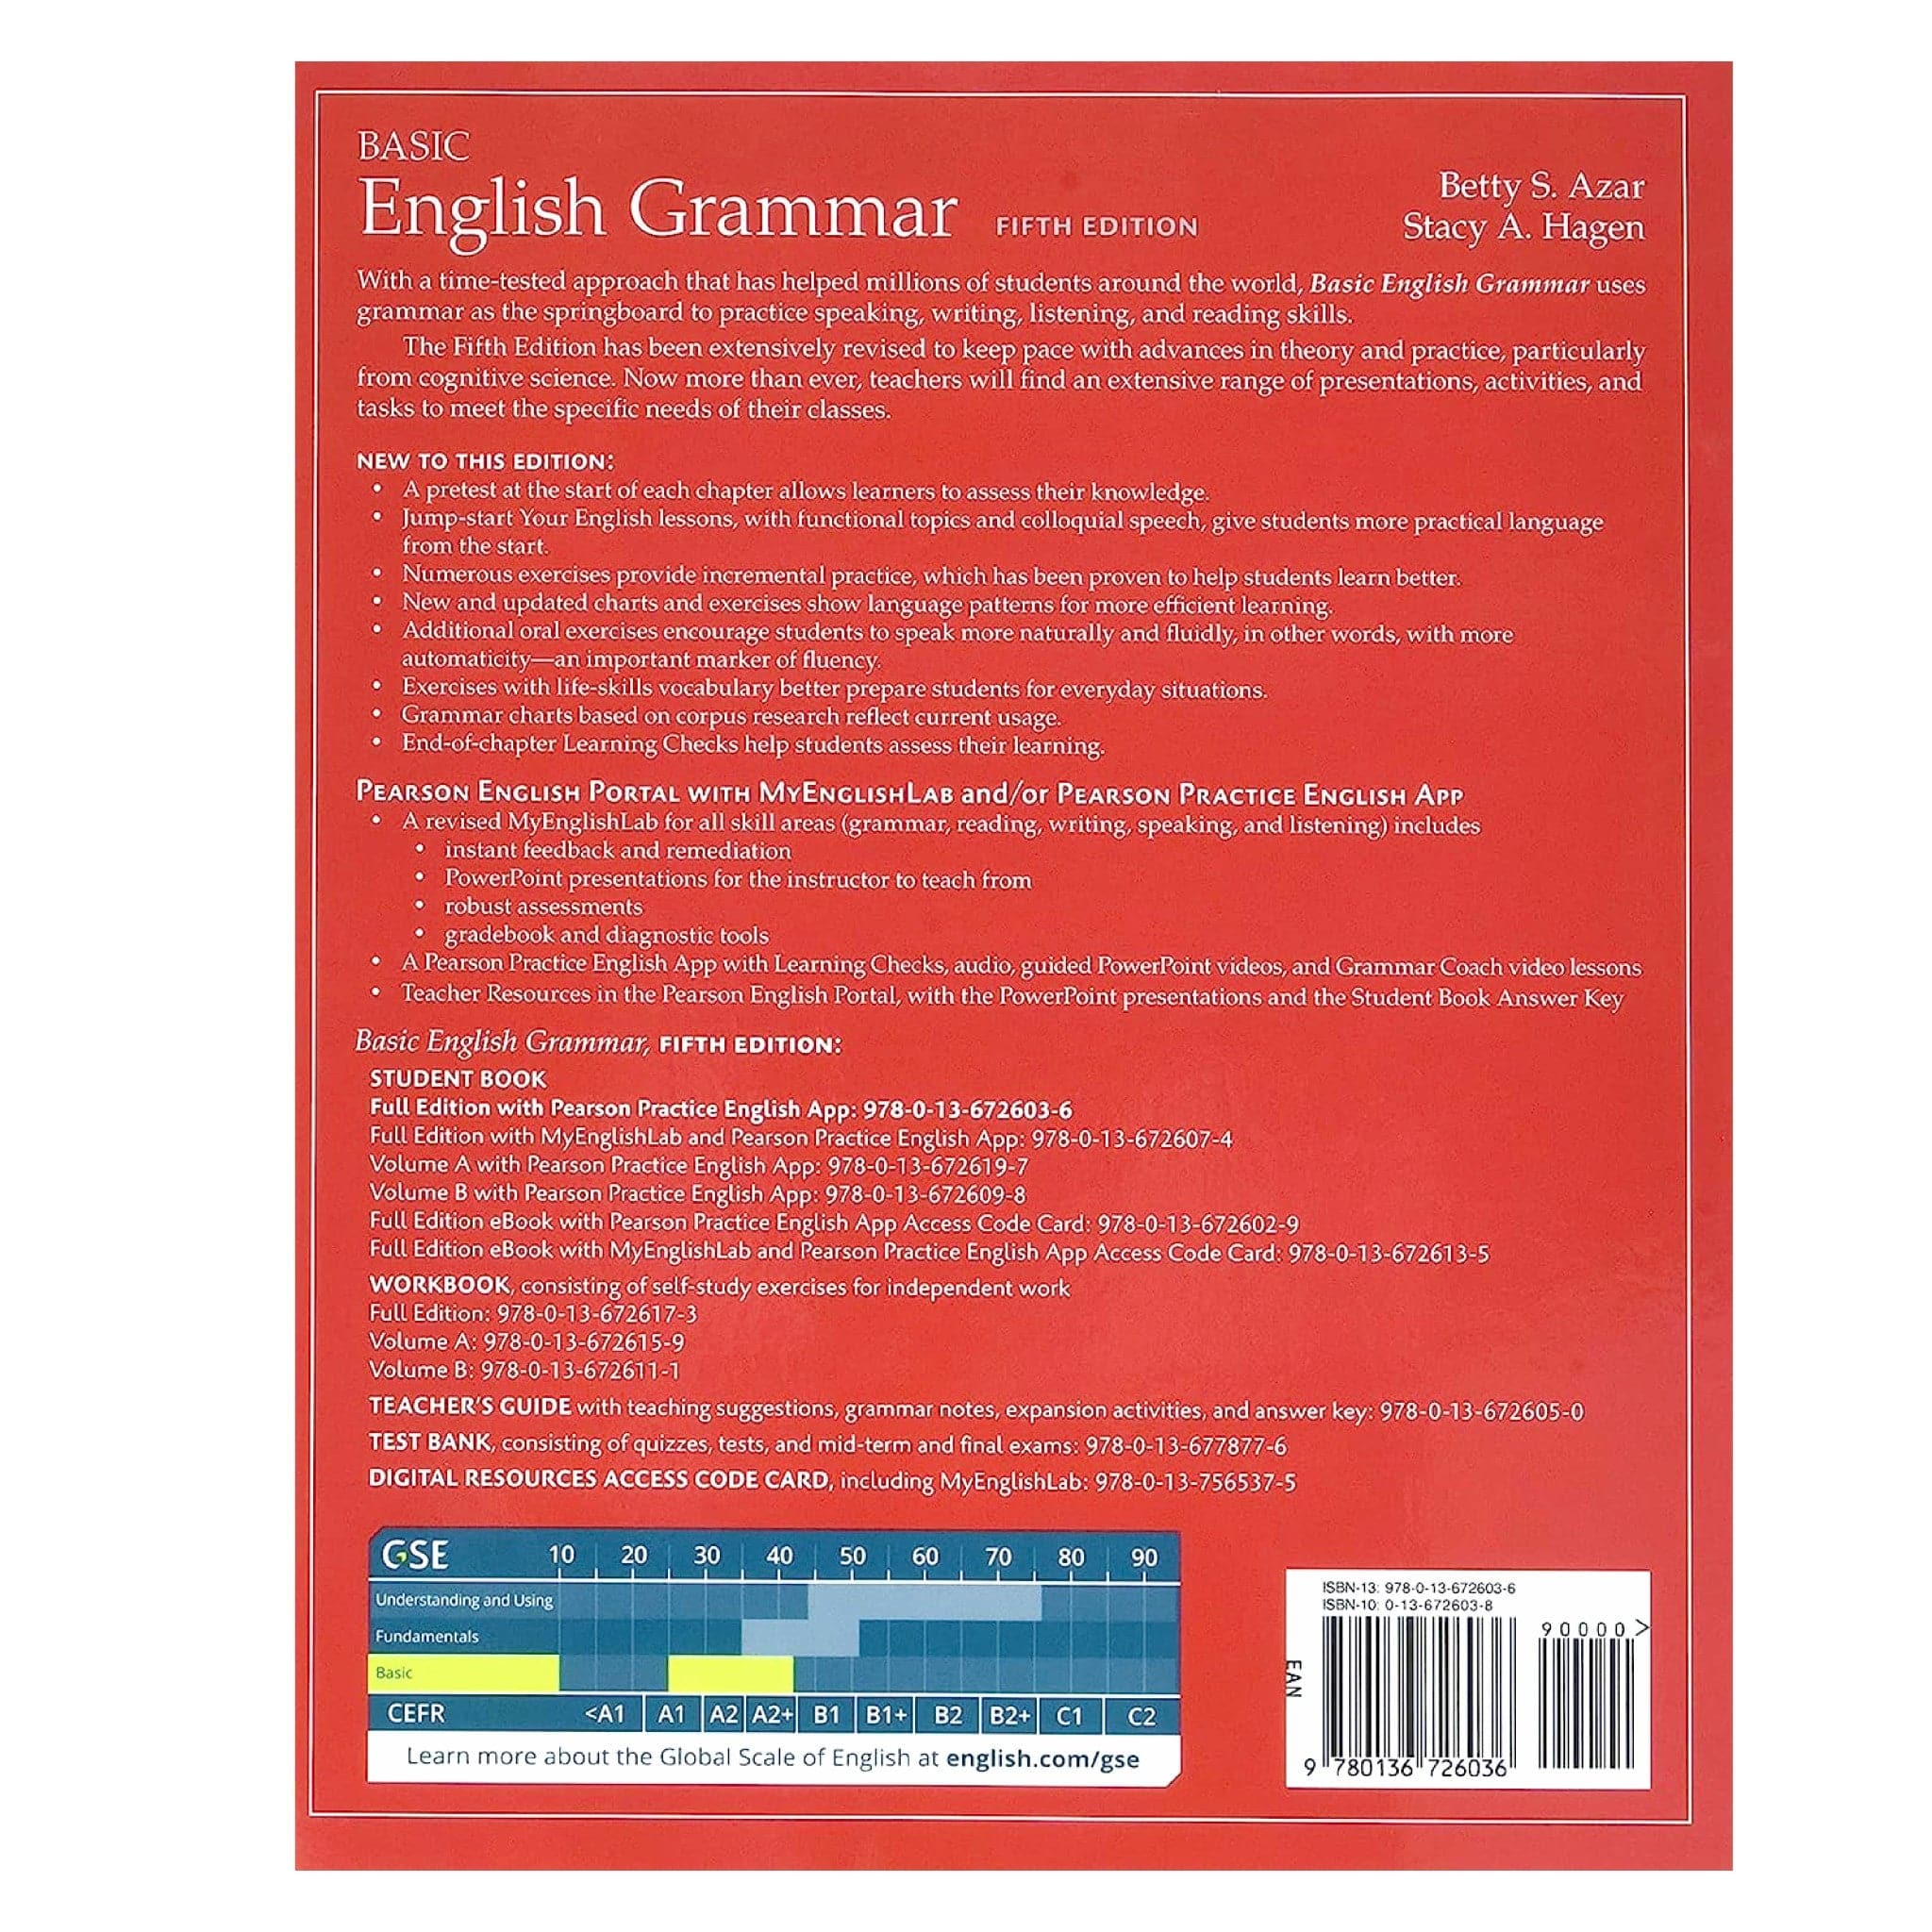 Basic English Grammar Novel By Pearson